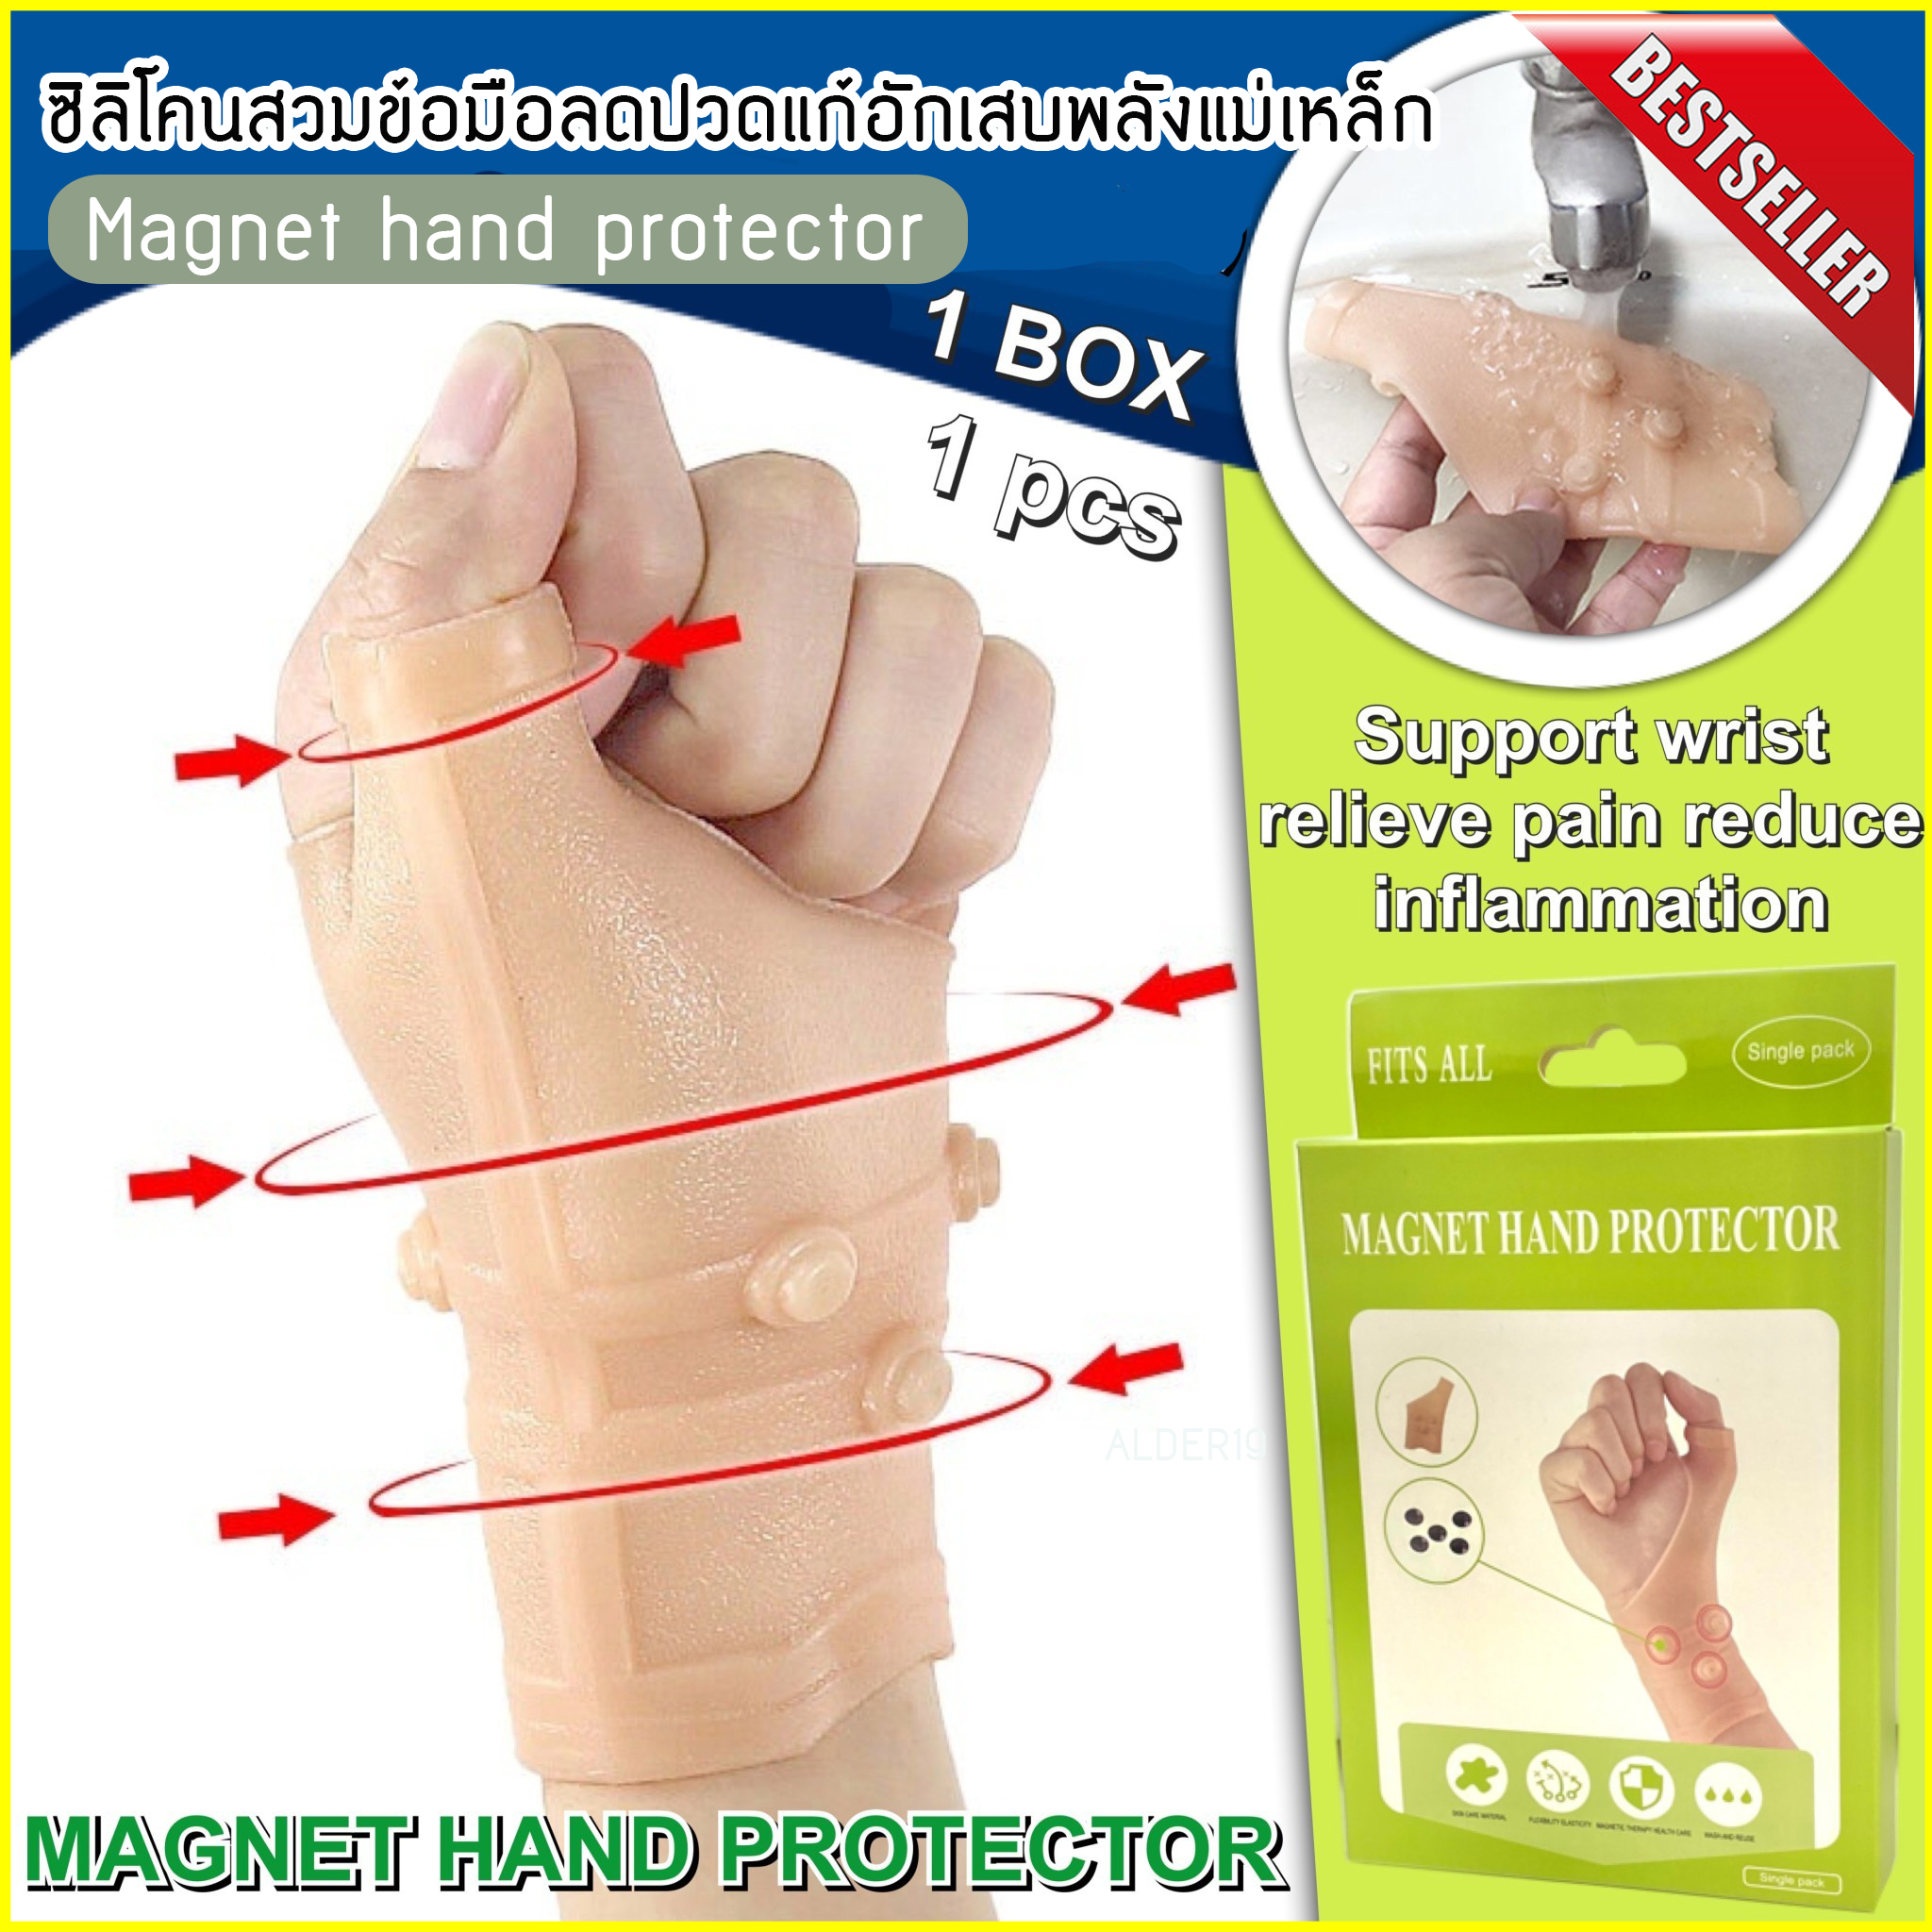 ALDER19 Magnet hand protector Support Wrist 1PCS ซิลิโคนสวมข้อมือลดปวดแก้อักเสบพลังแม่เหล็ก ซิลิโคนแก้ปวดข้อมือ ลดอาการปวด ข้อมืออักเสบ